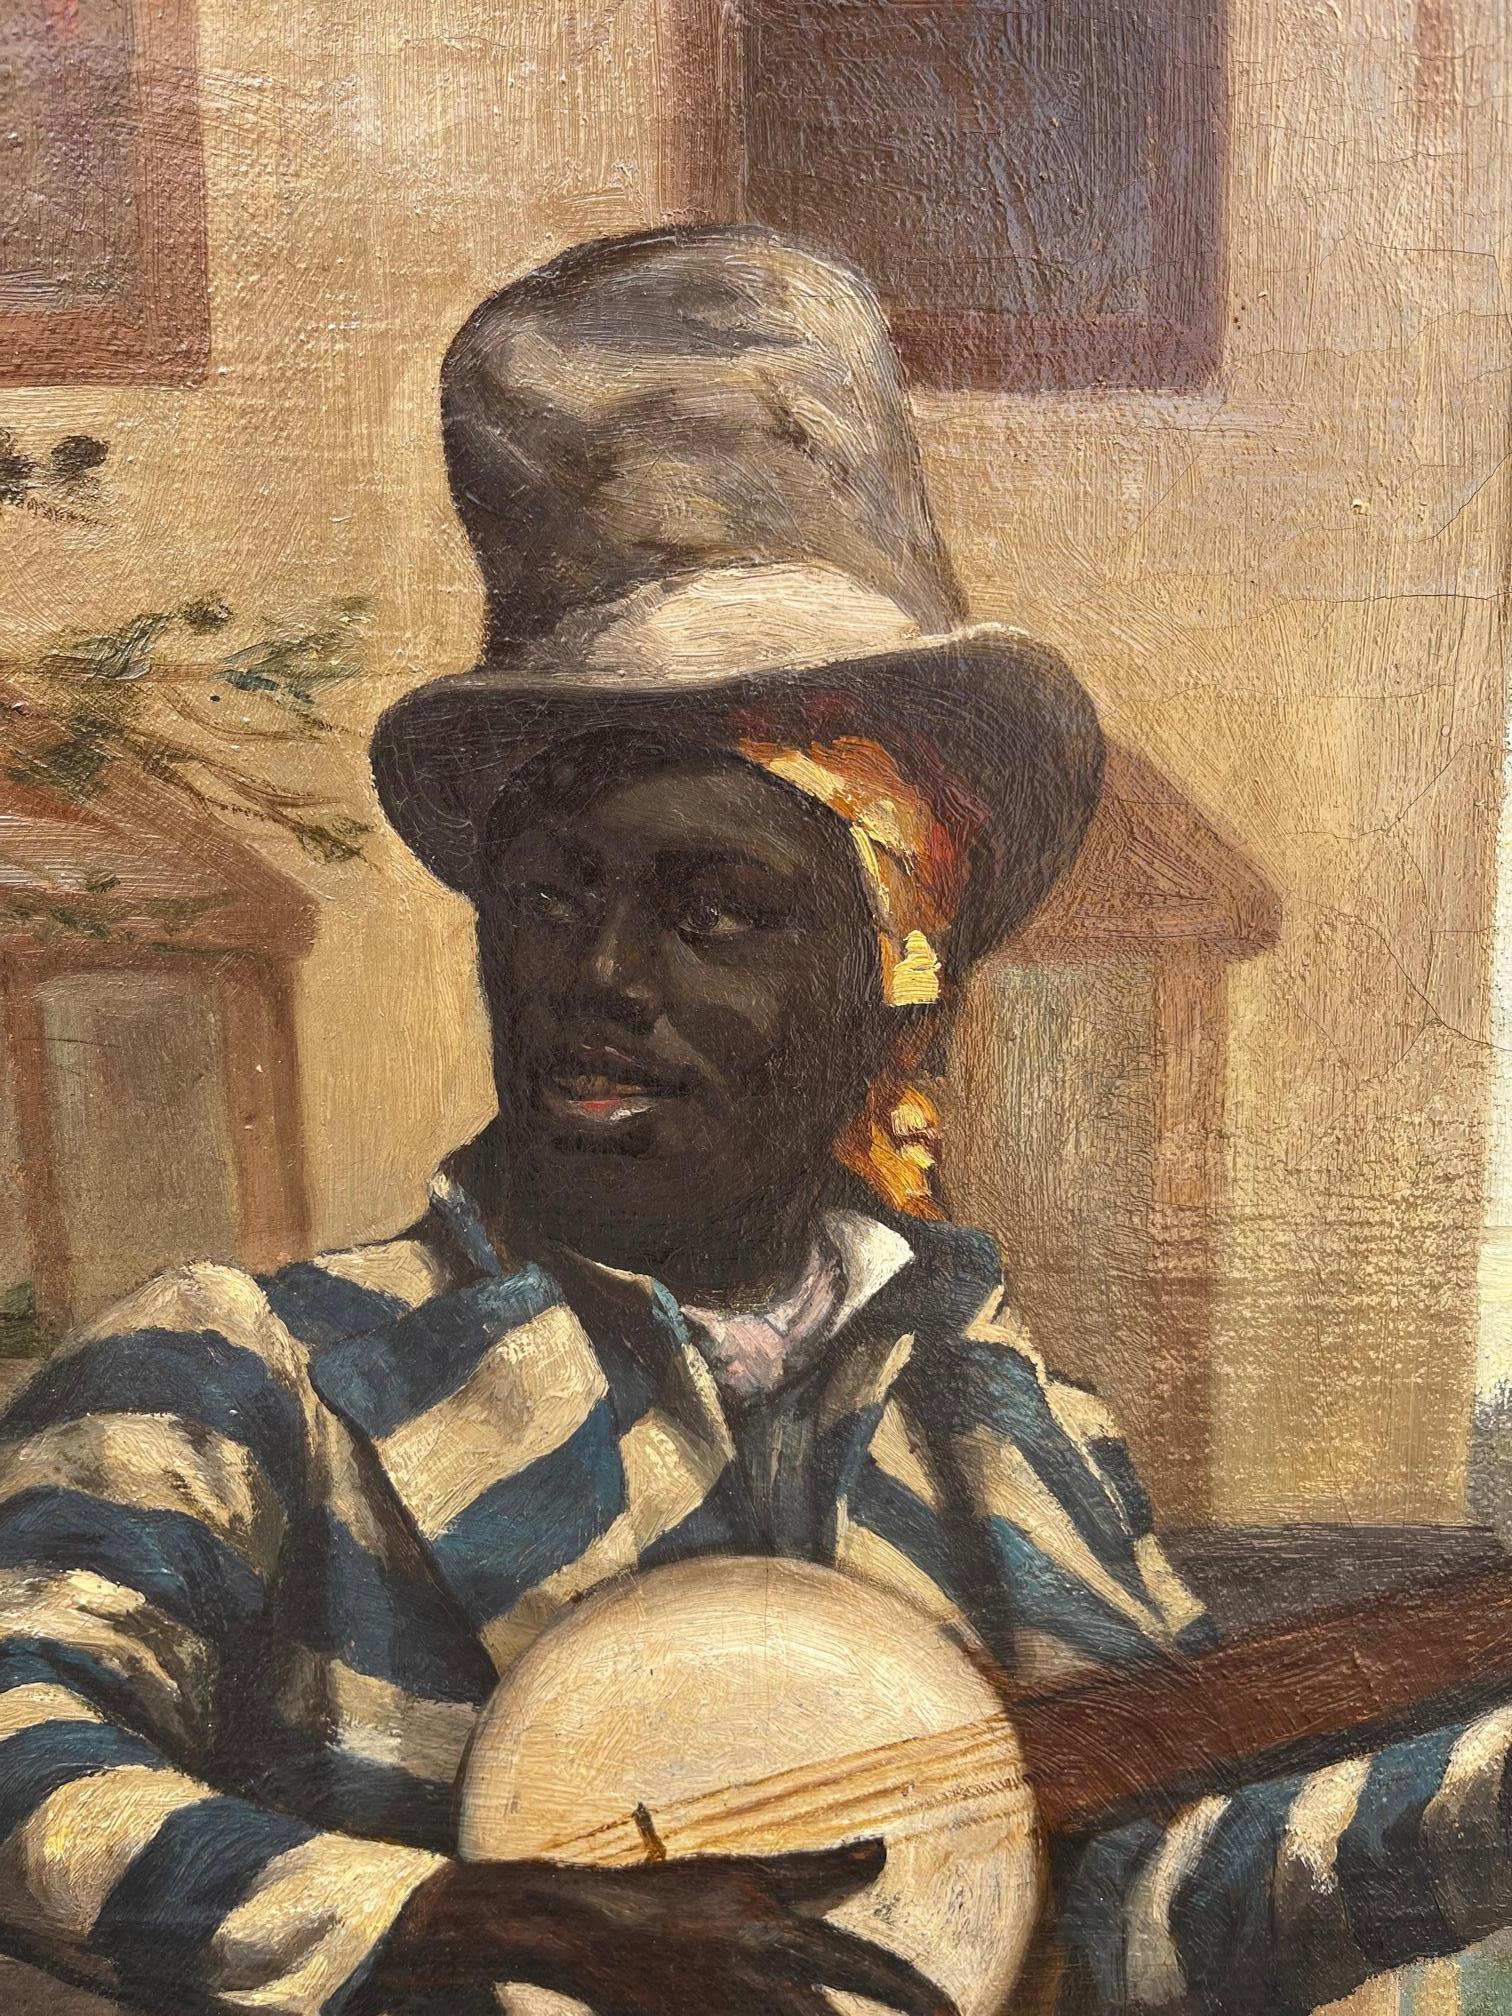 Zygmunt Sokolowski (1857-1888), 
The Bandjo Player, 
Oil on canvas, 
circa 1950, Poland.
Height 92 cm, width 59 cm.